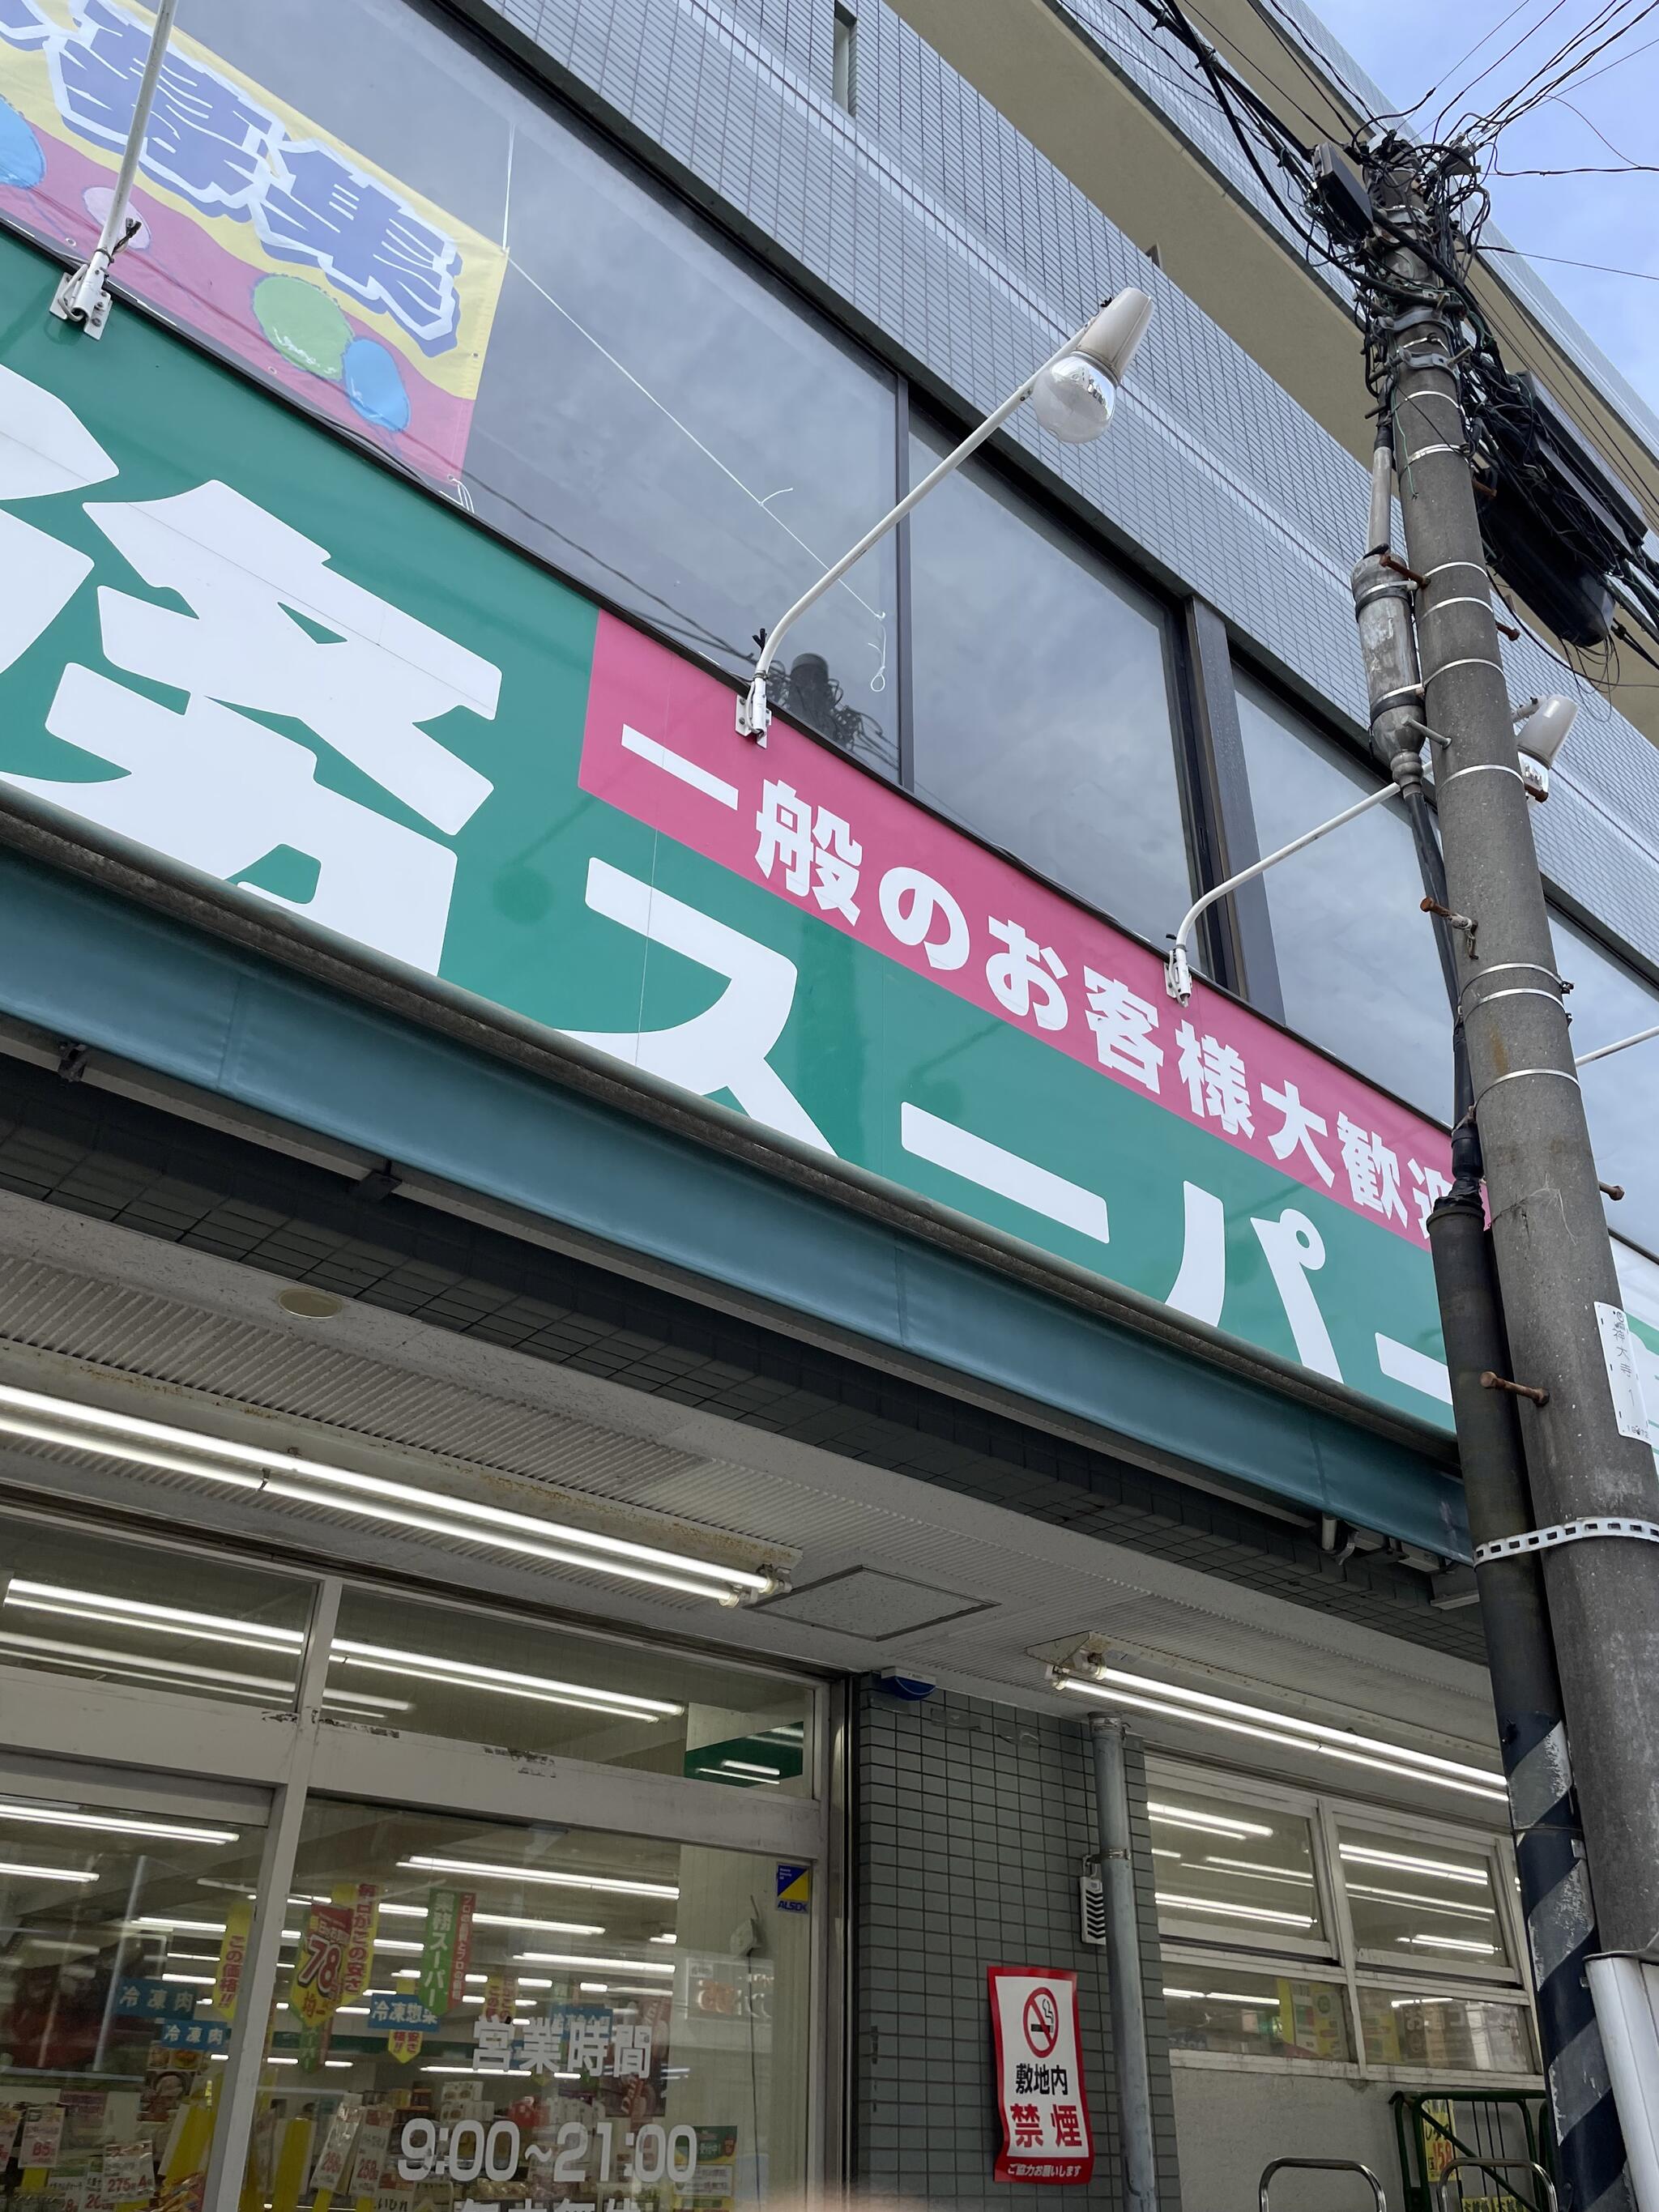 業務スーパー 六角橋店の代表写真8